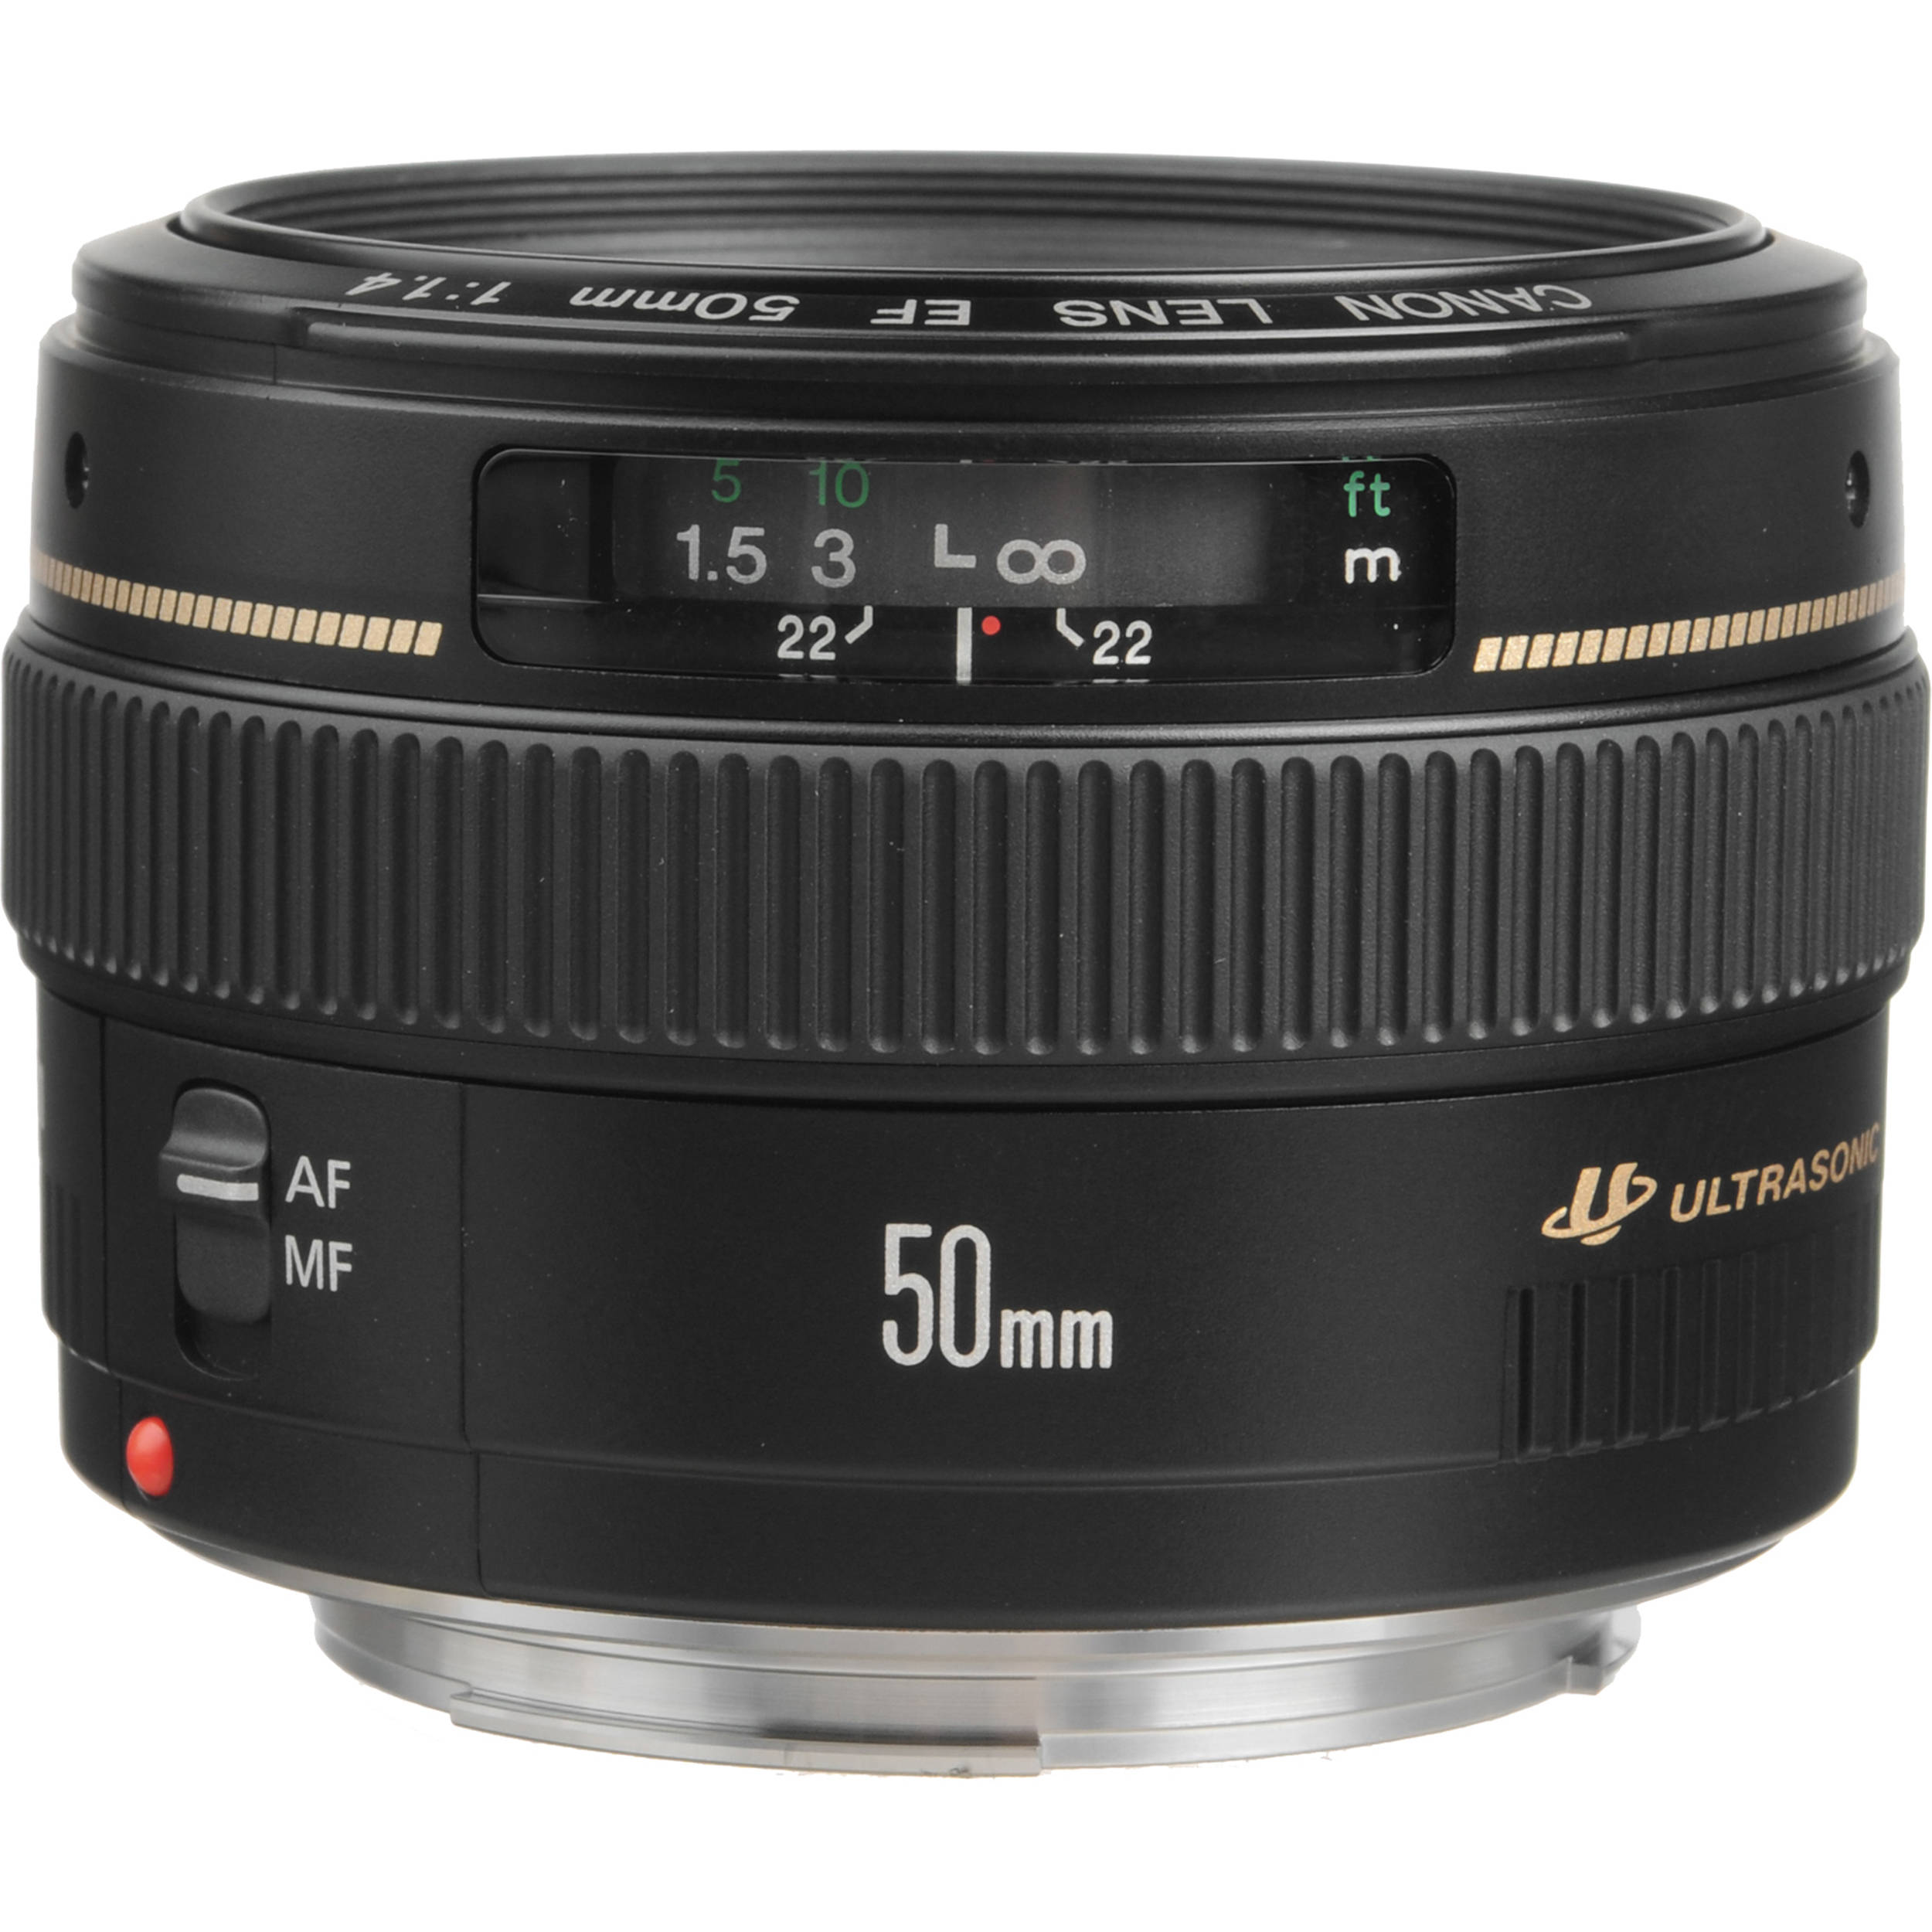 Canon EF 35mm f/1.4L II USM Lens (Intl Model) + Fully Loaded Lens filter Kit